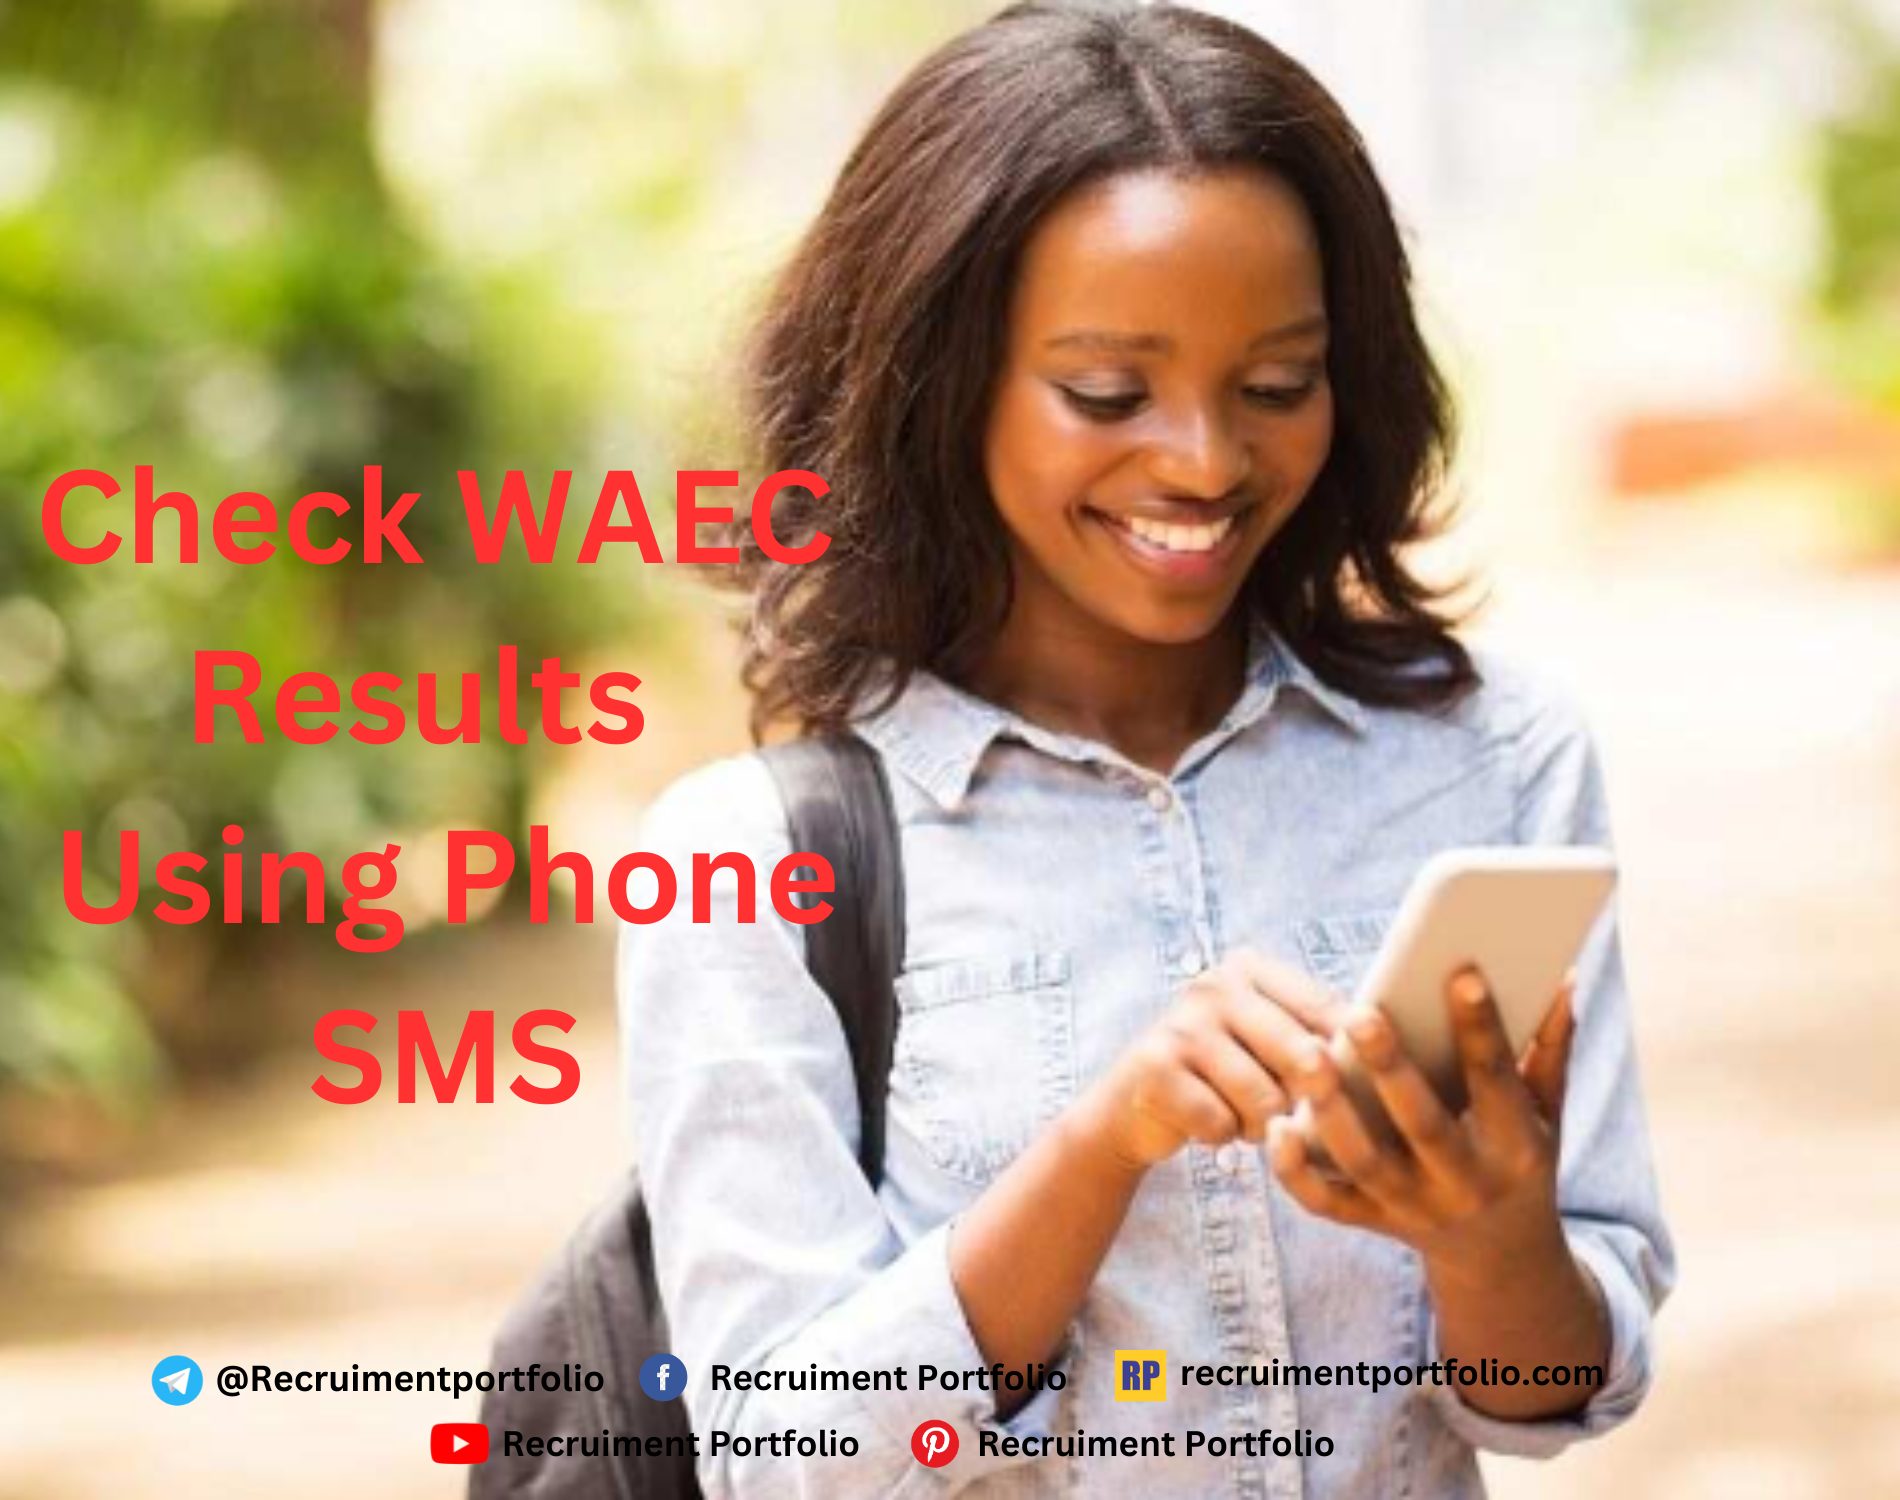 Check WAEC Results Using Phone